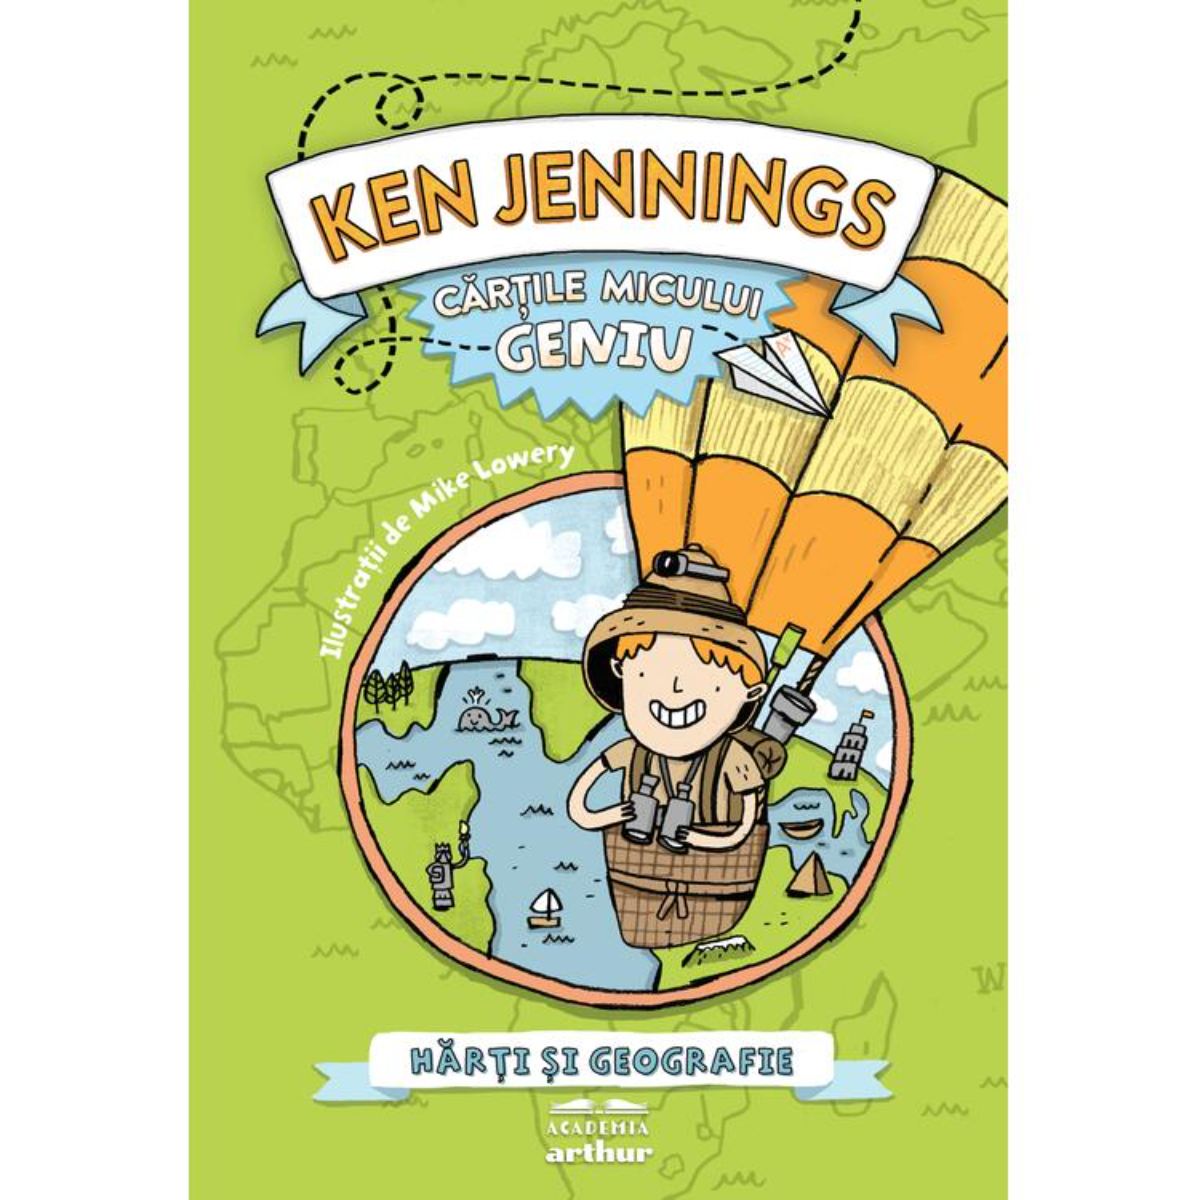 Cartile micului geniu, Harti si geografie, Ken Jennings